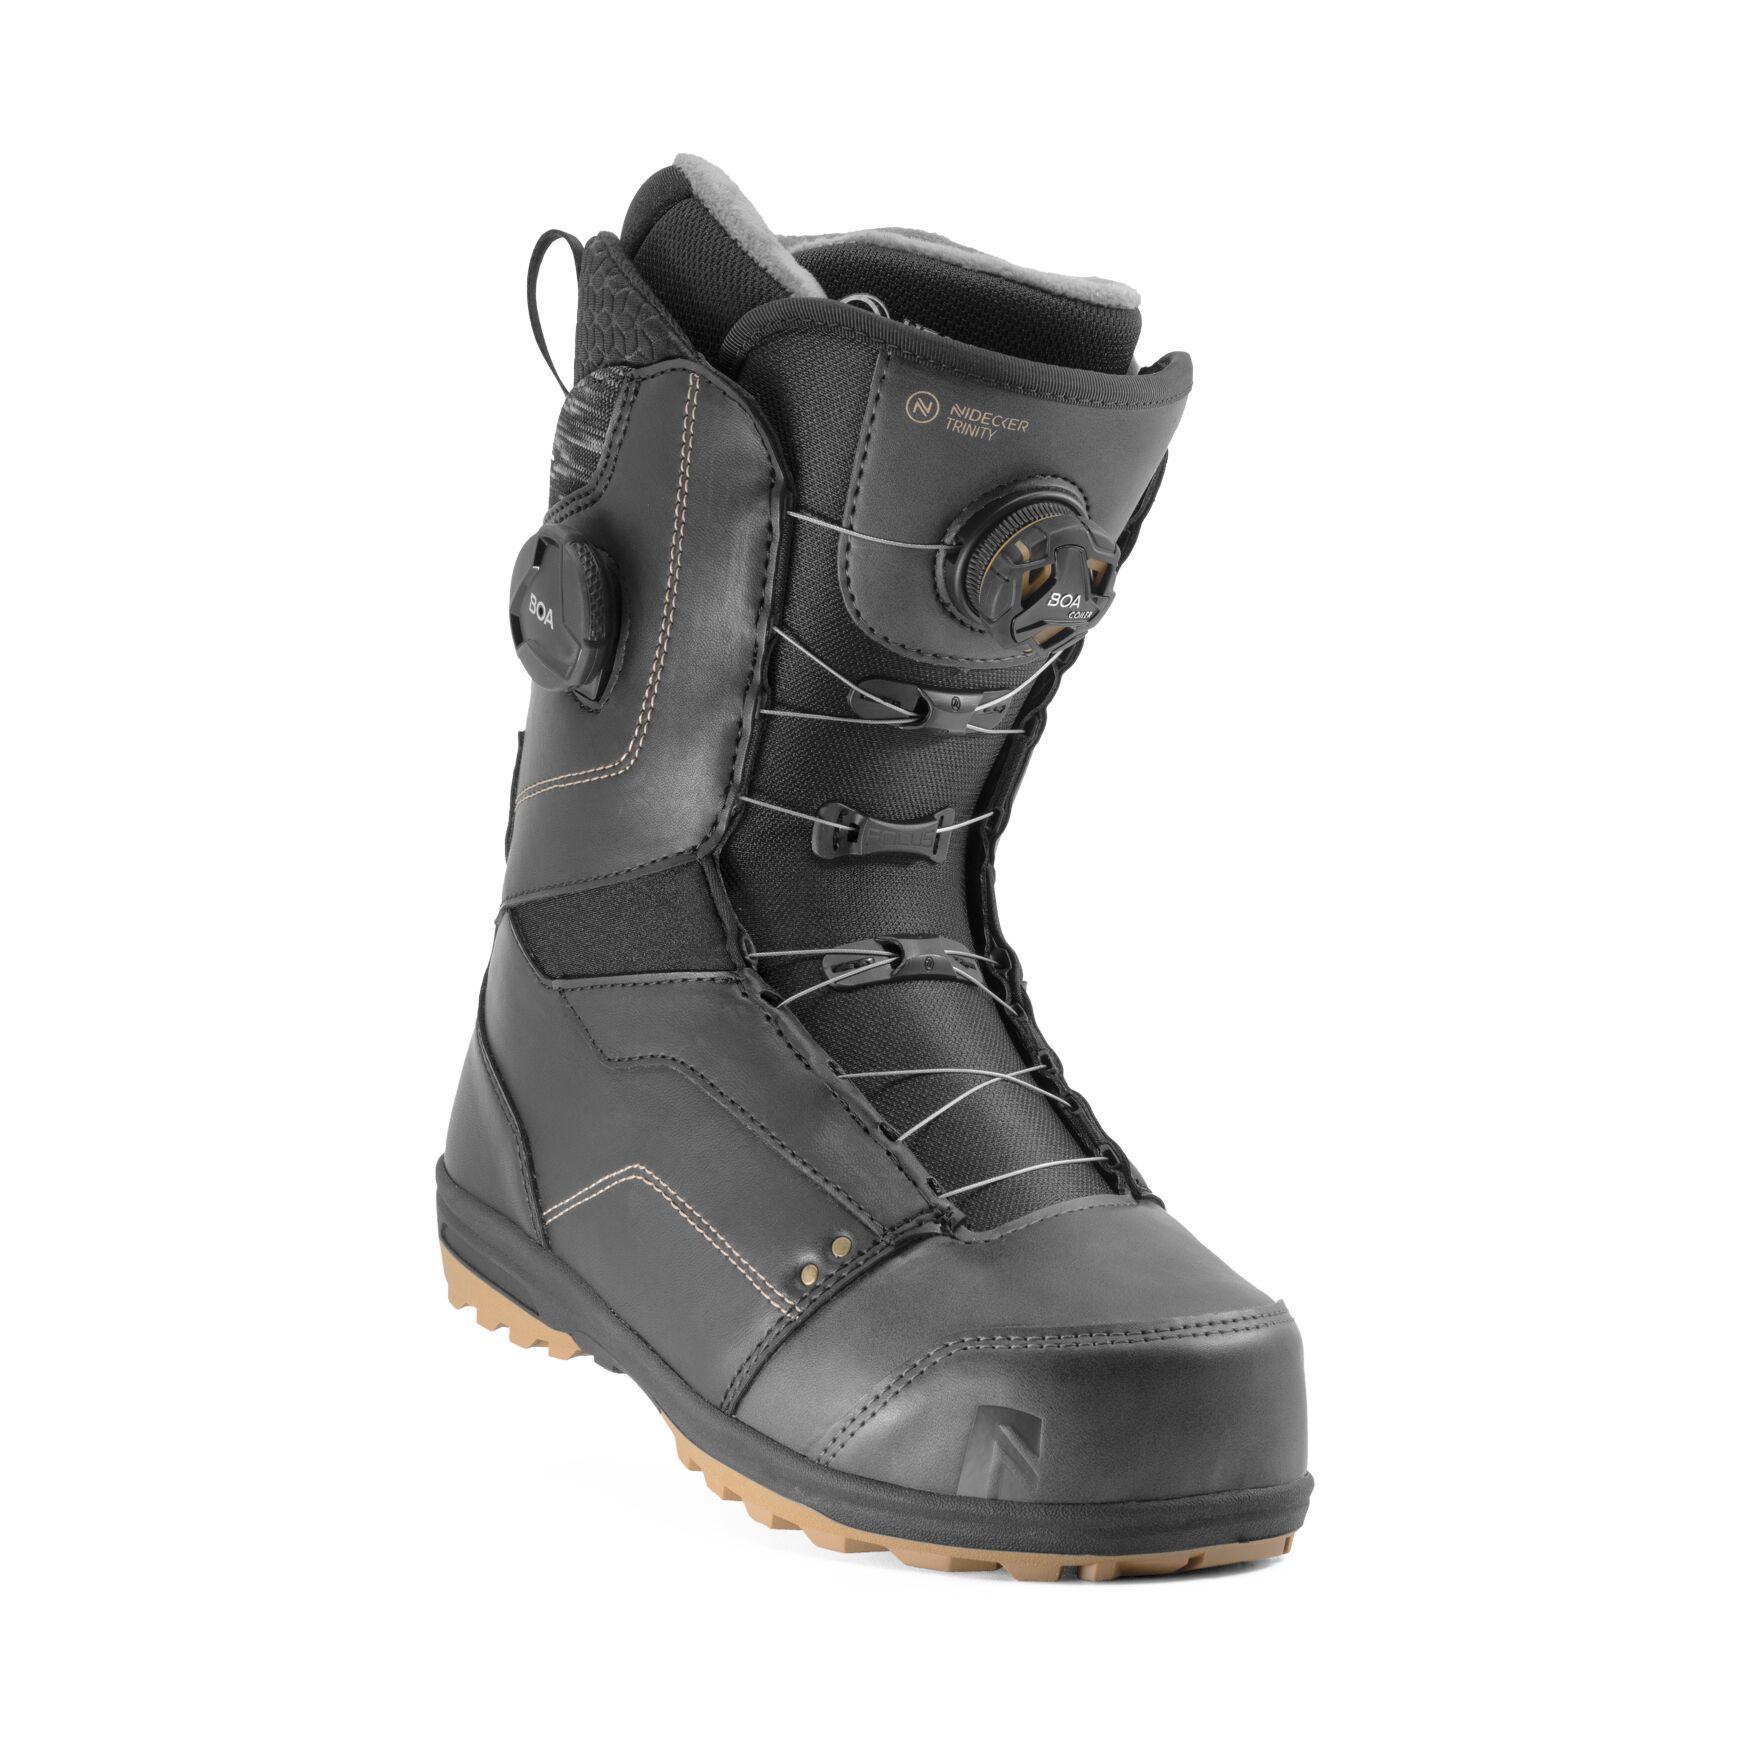 Boots de snowboard Nidecker Trinity Black 2020